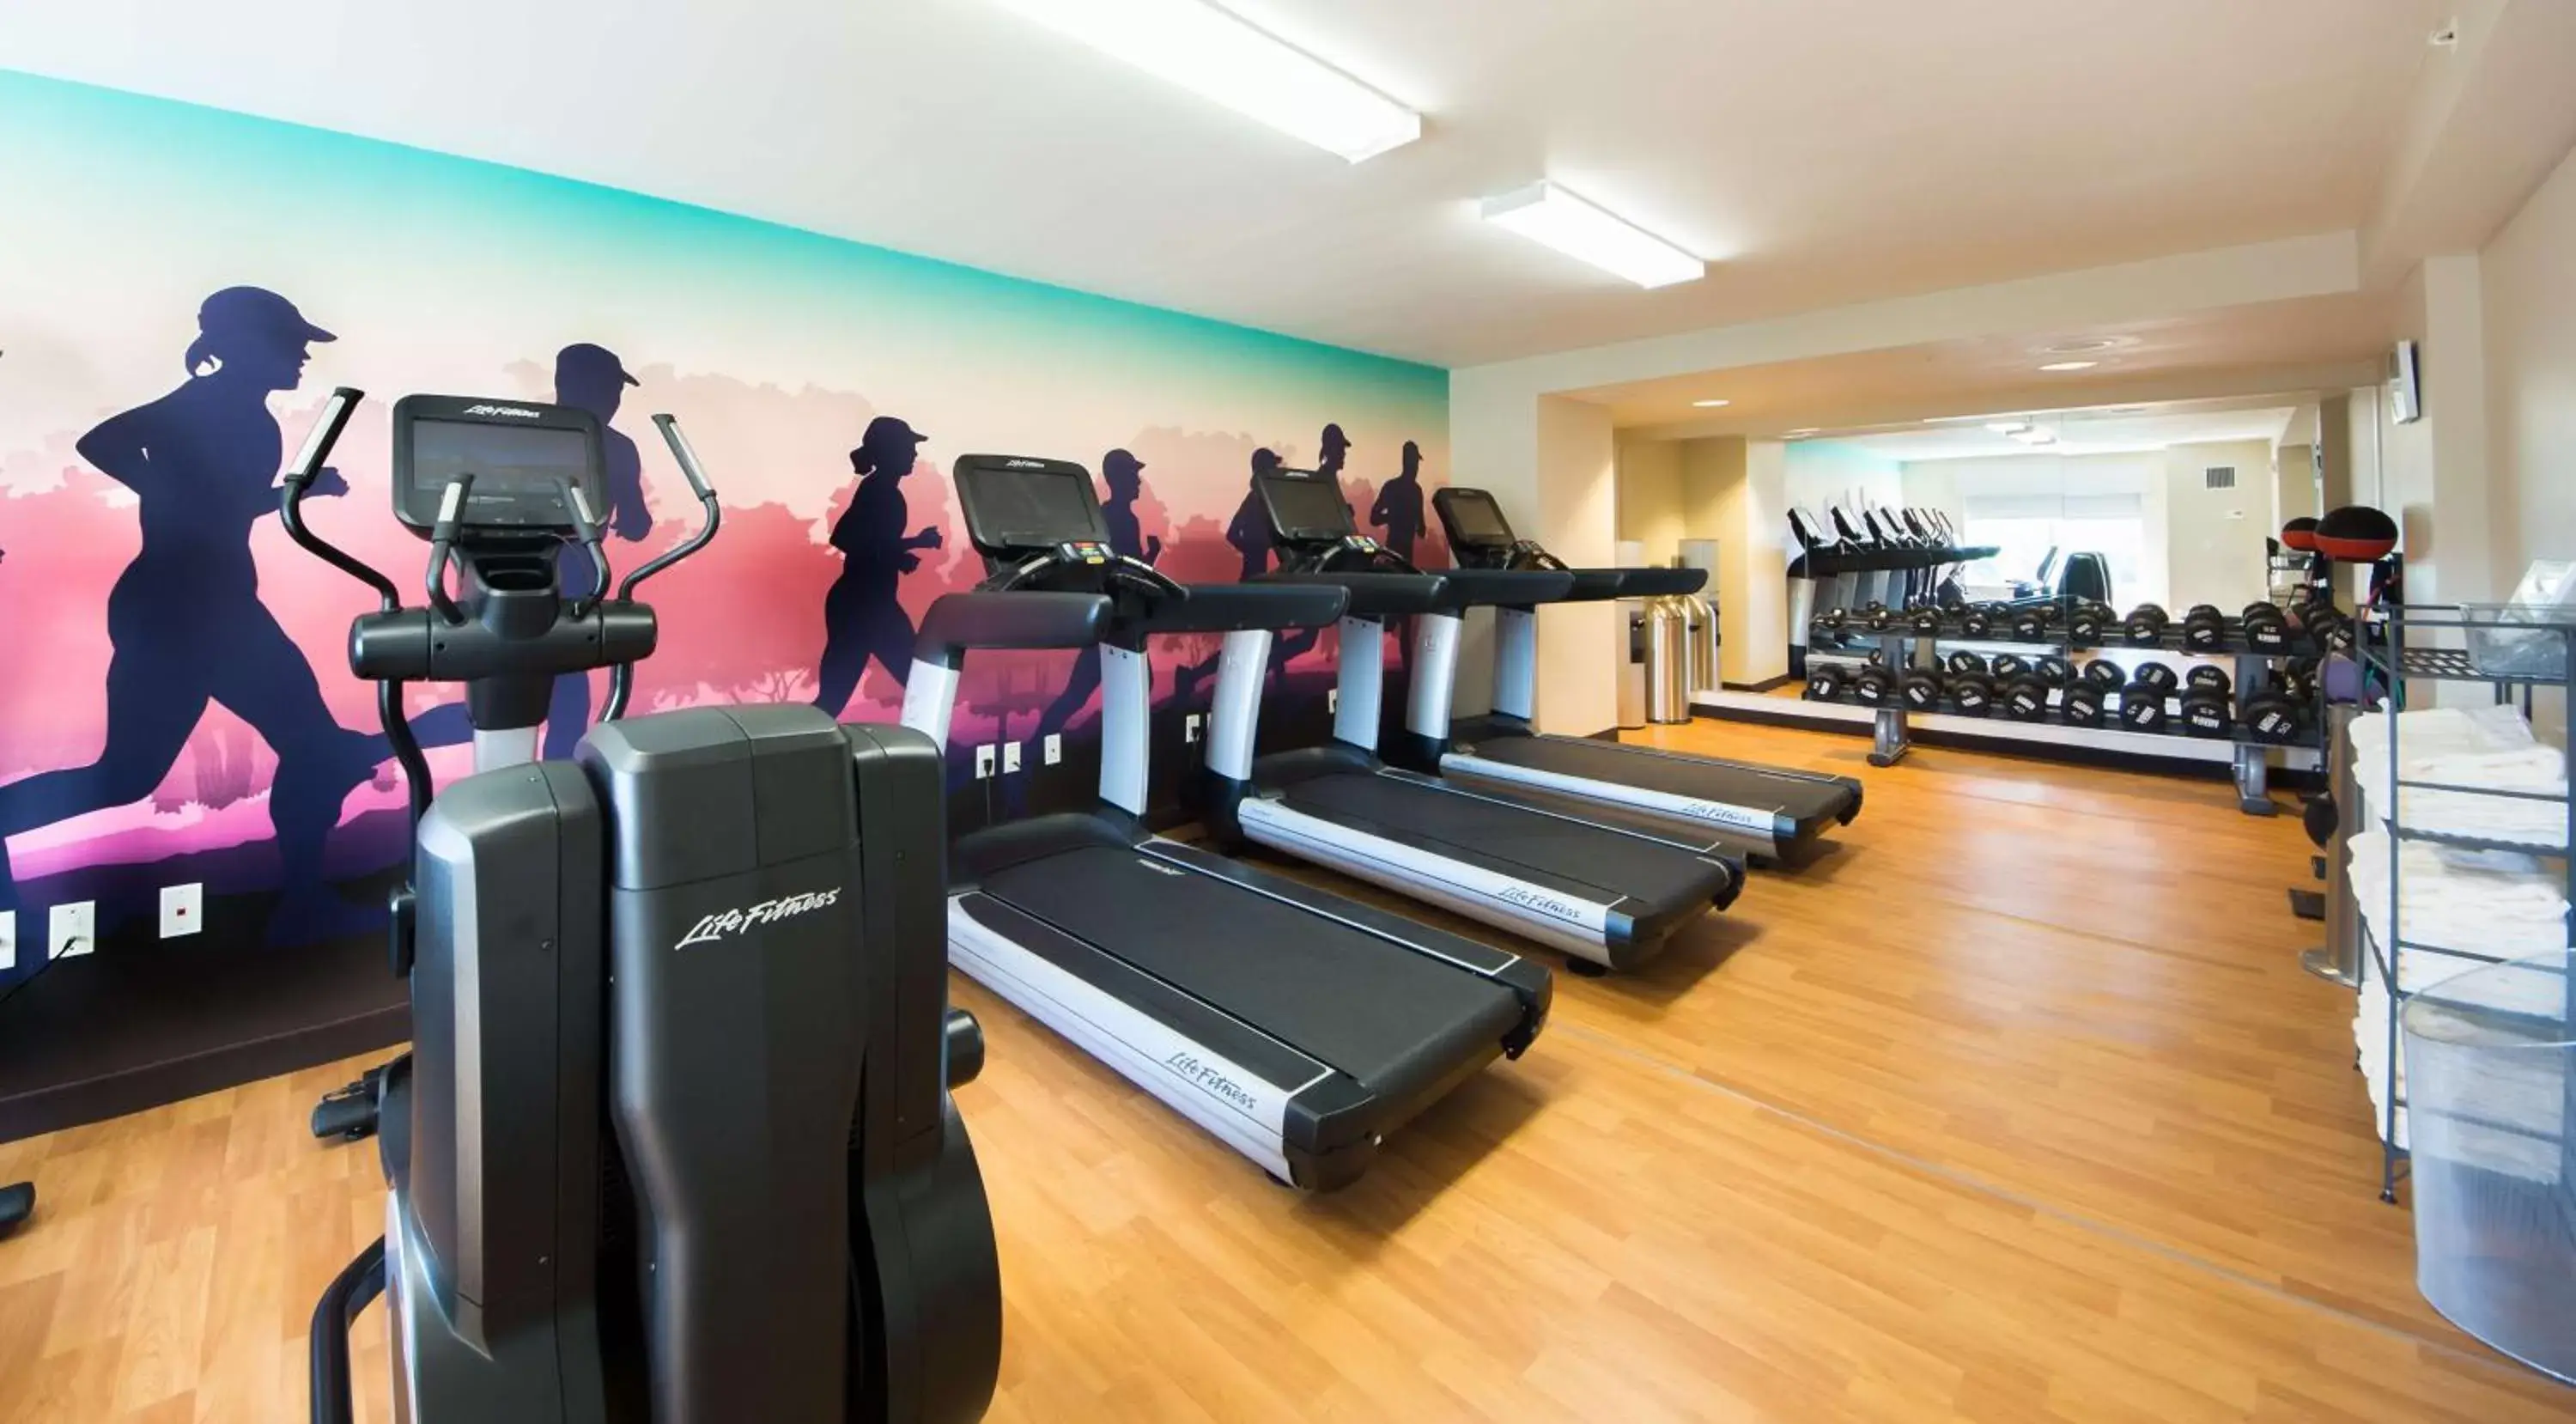 Fitness centre/facilities, Fitness Center/Facilities in Hyatt Place Orlando/Lake Buena Vista